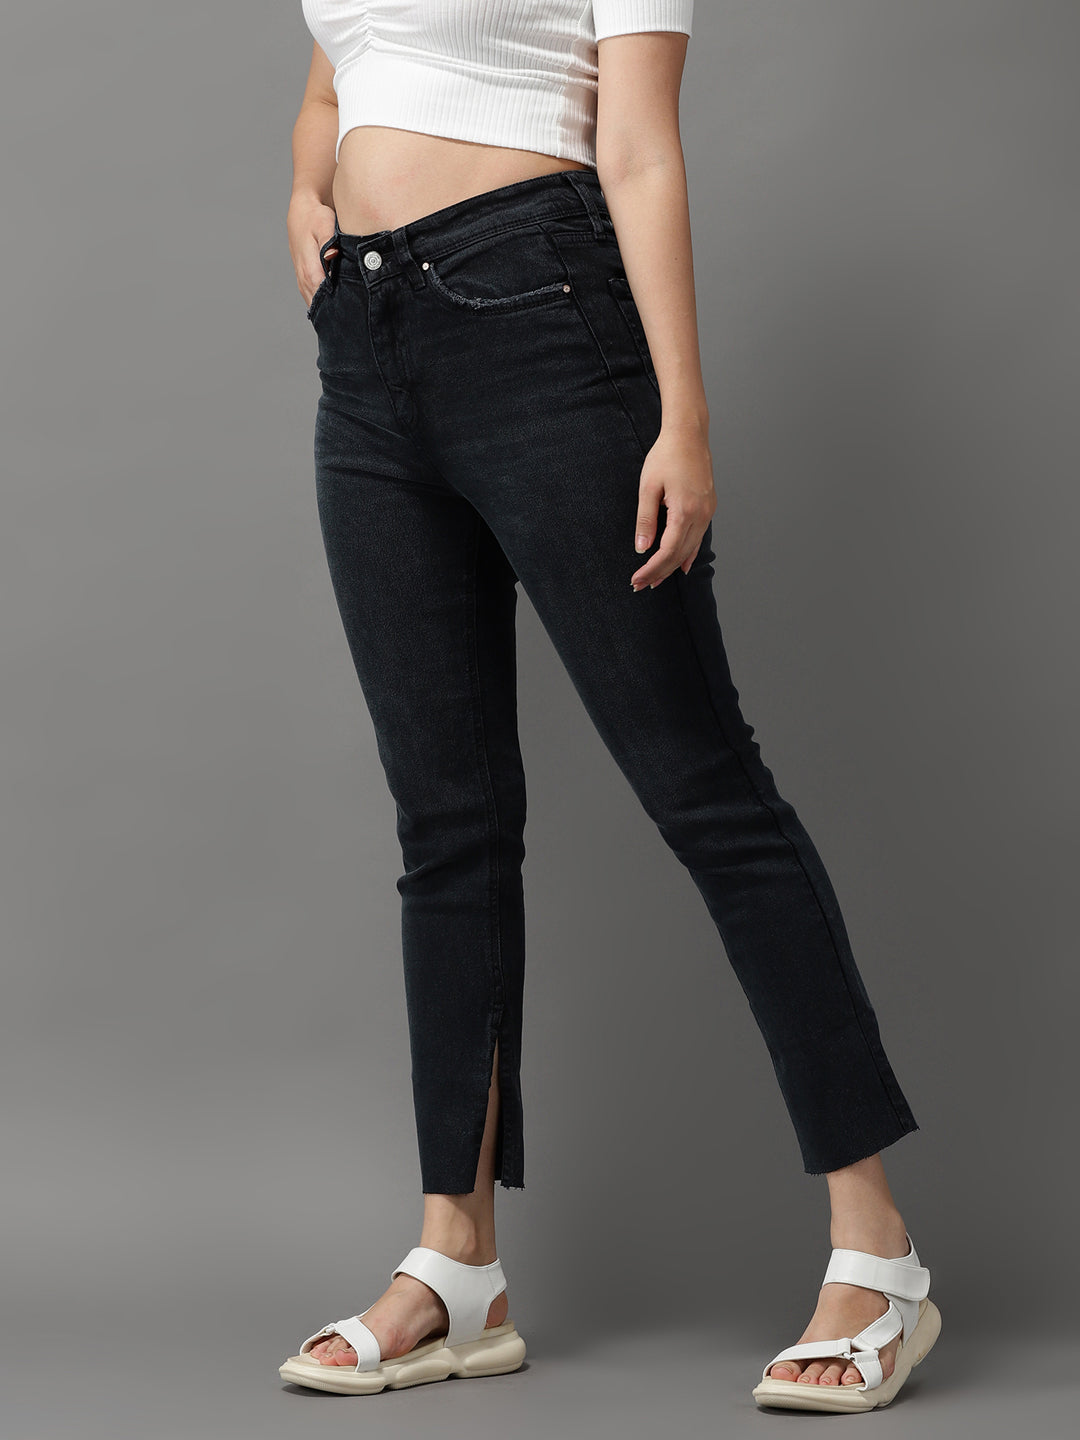 Women's Charcoal Solid Slim Fit Denim Jeans